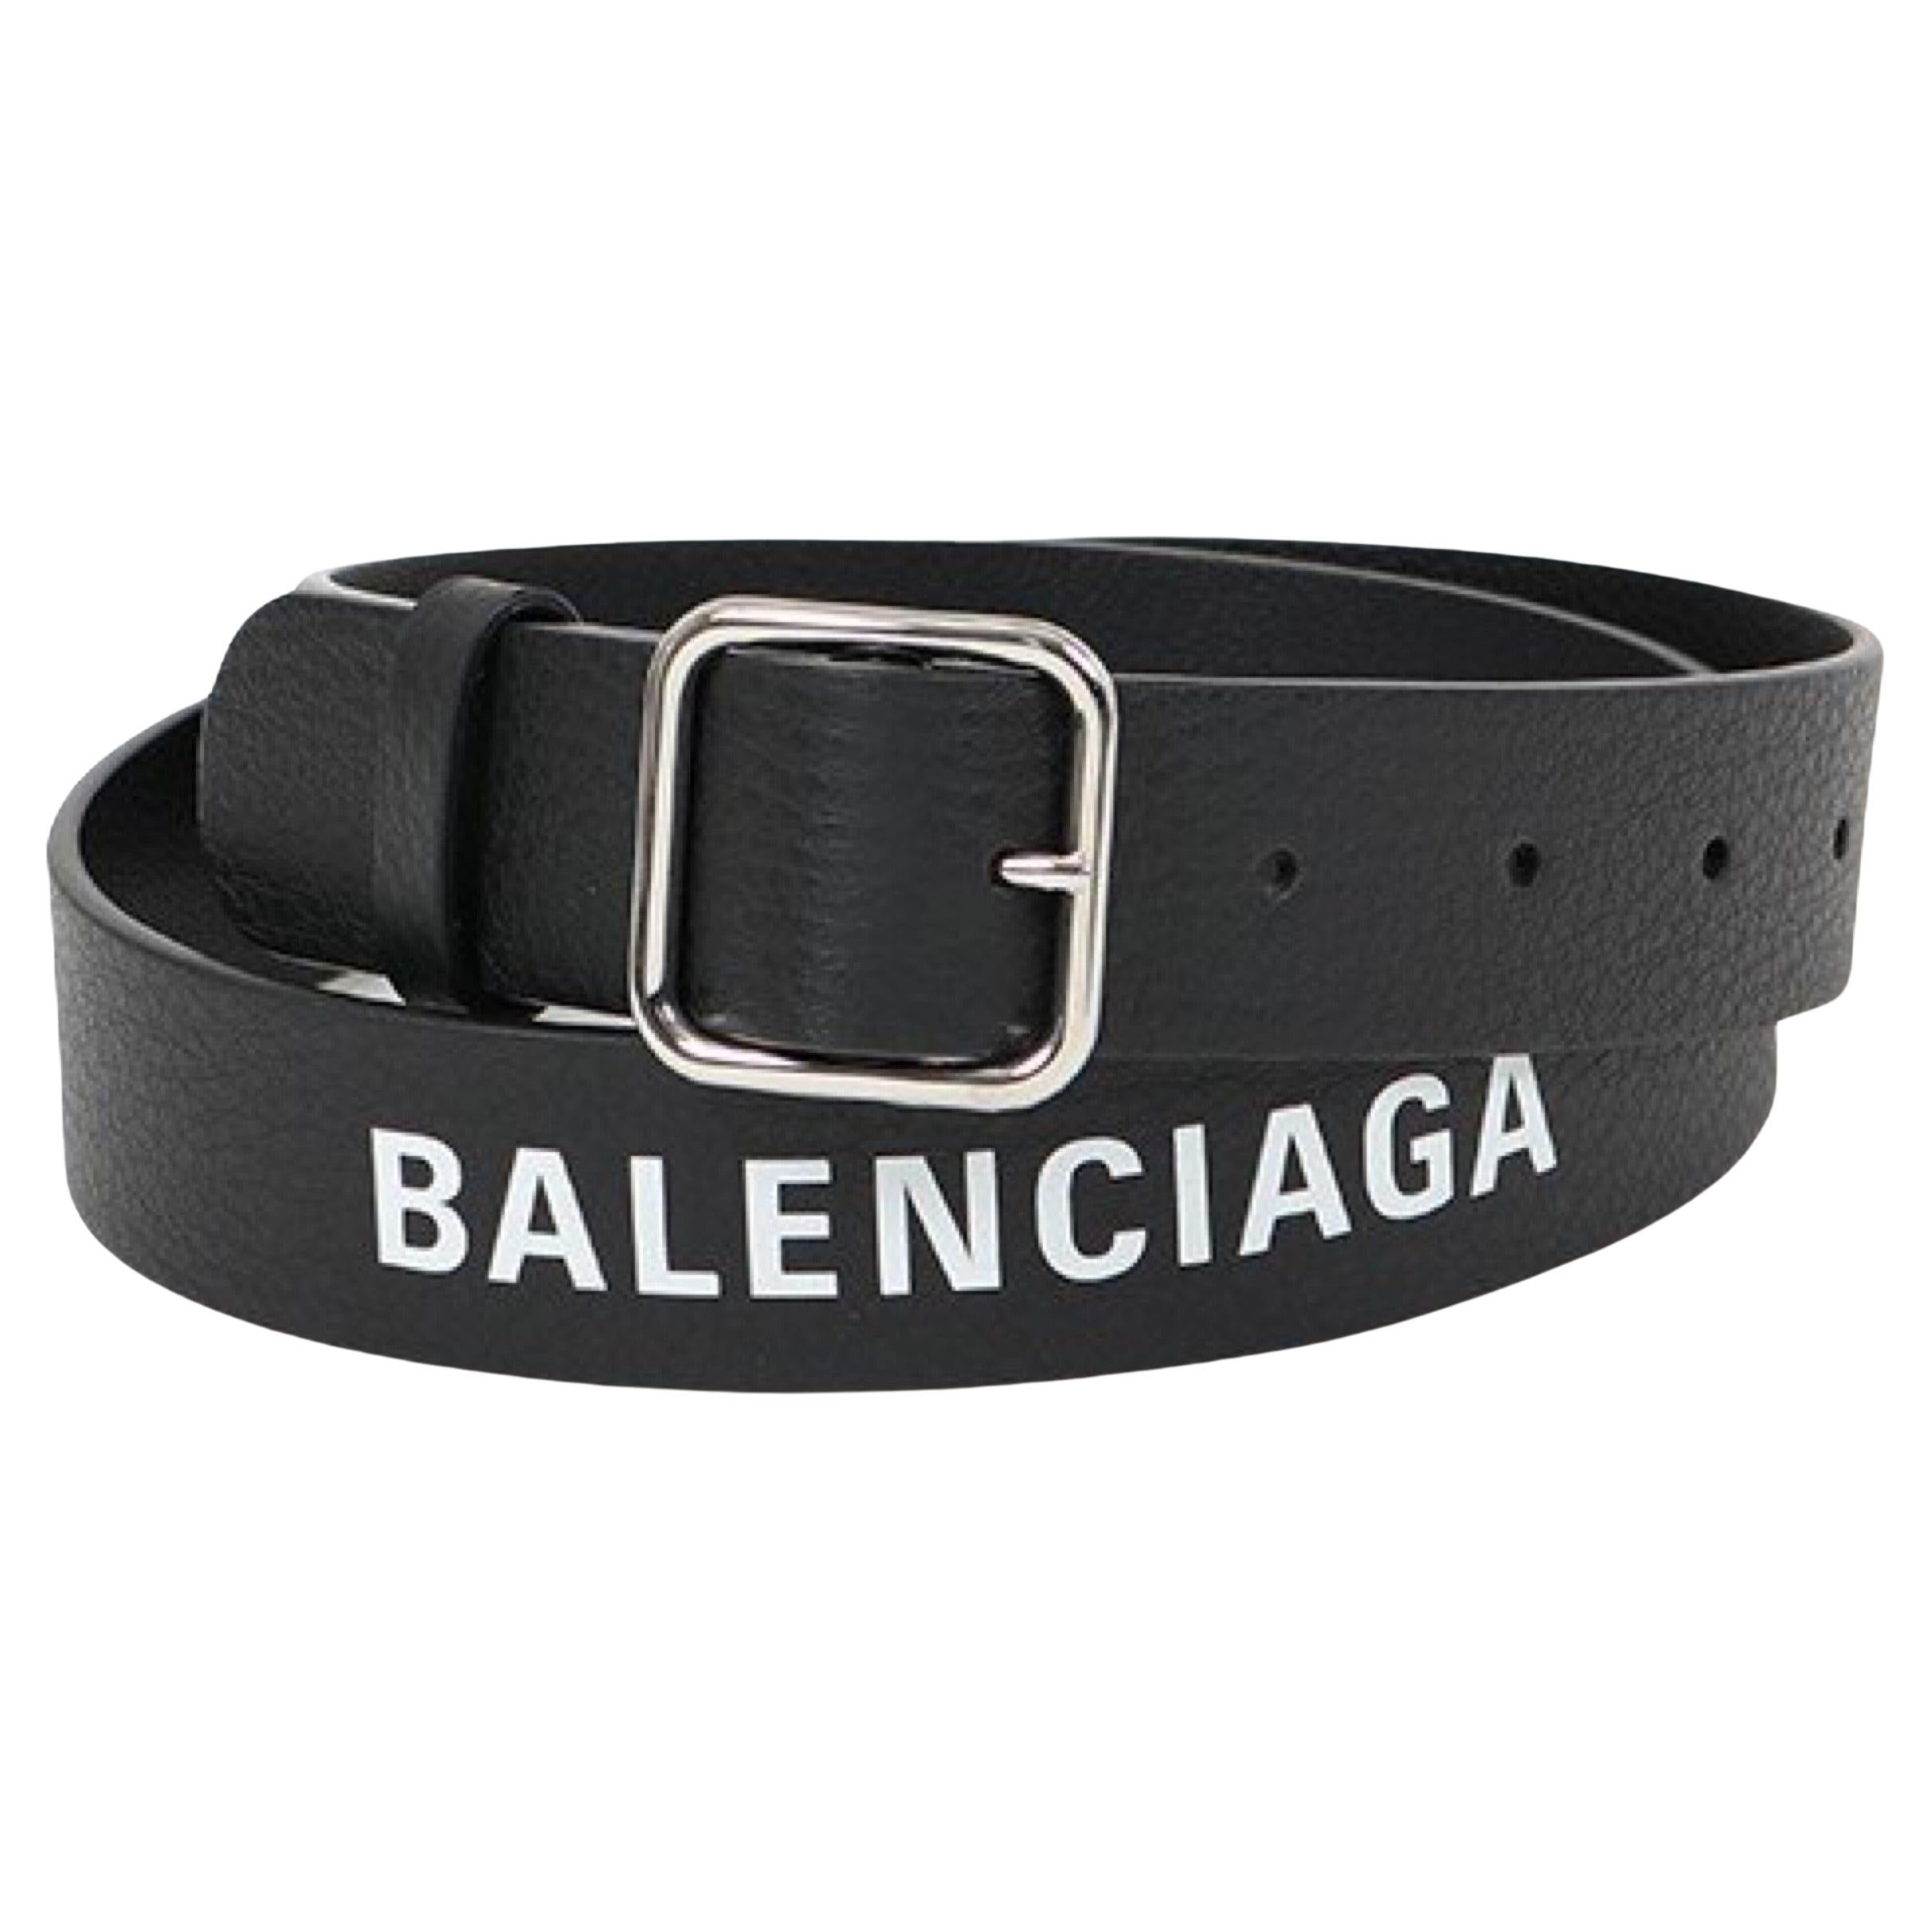 NEW Balenciaga Black Baltimore Printed Logo Leather Belt Size 90 EU For Sale